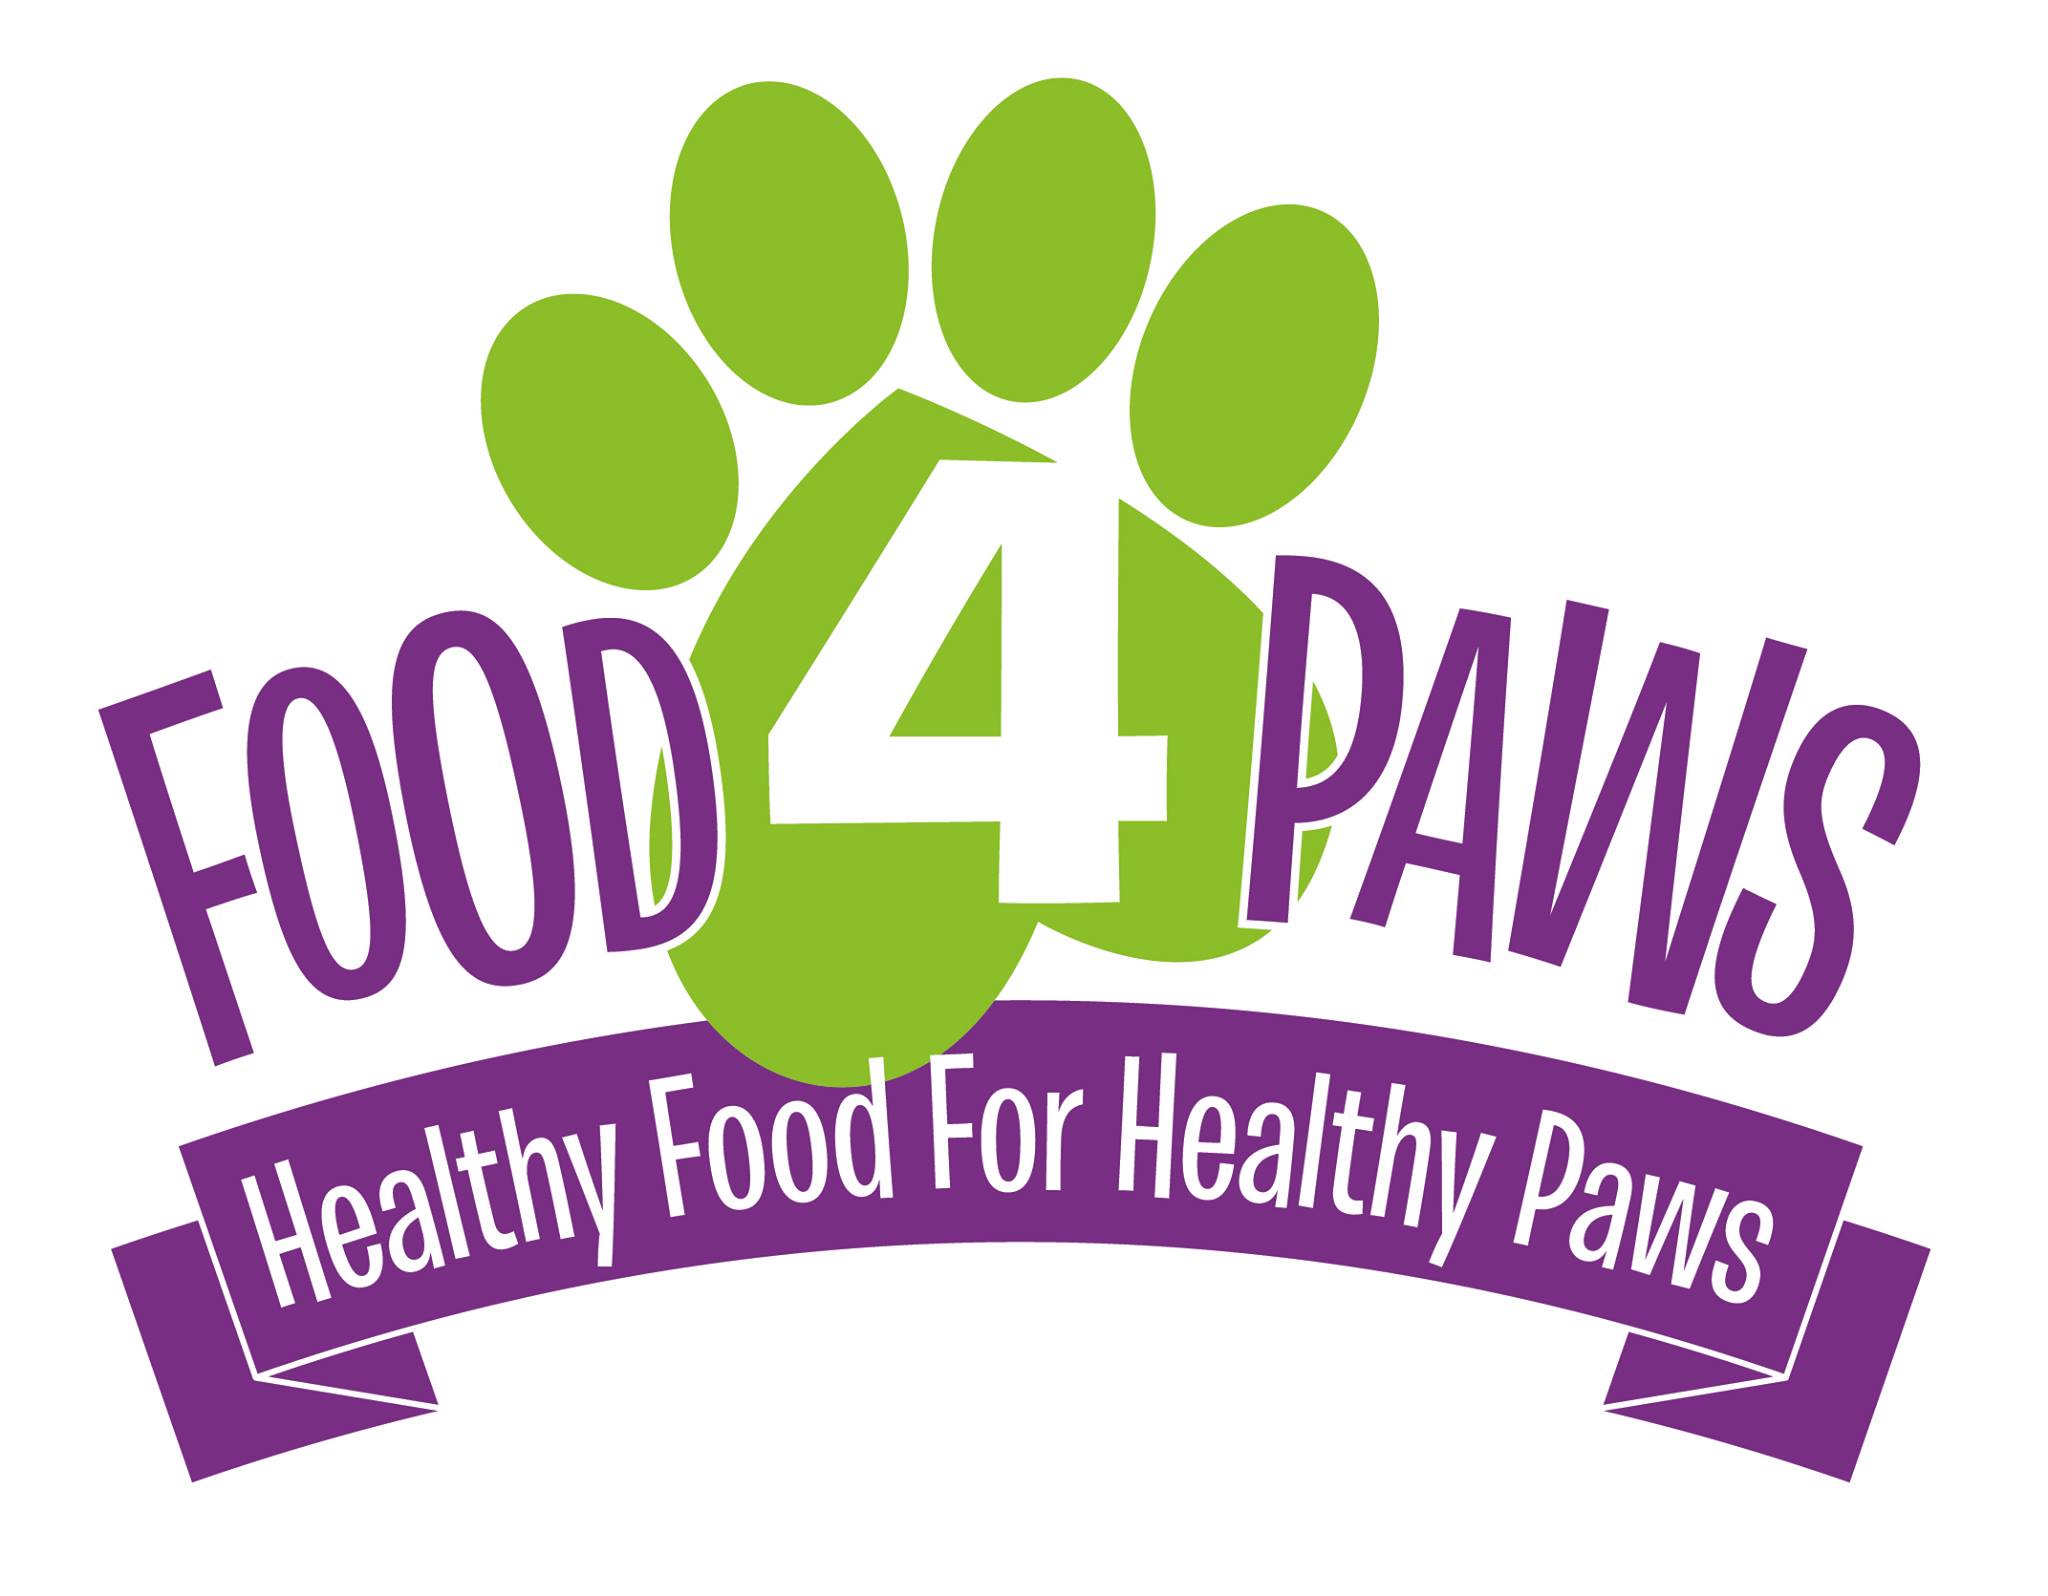 Company logo of Food 4 Paws